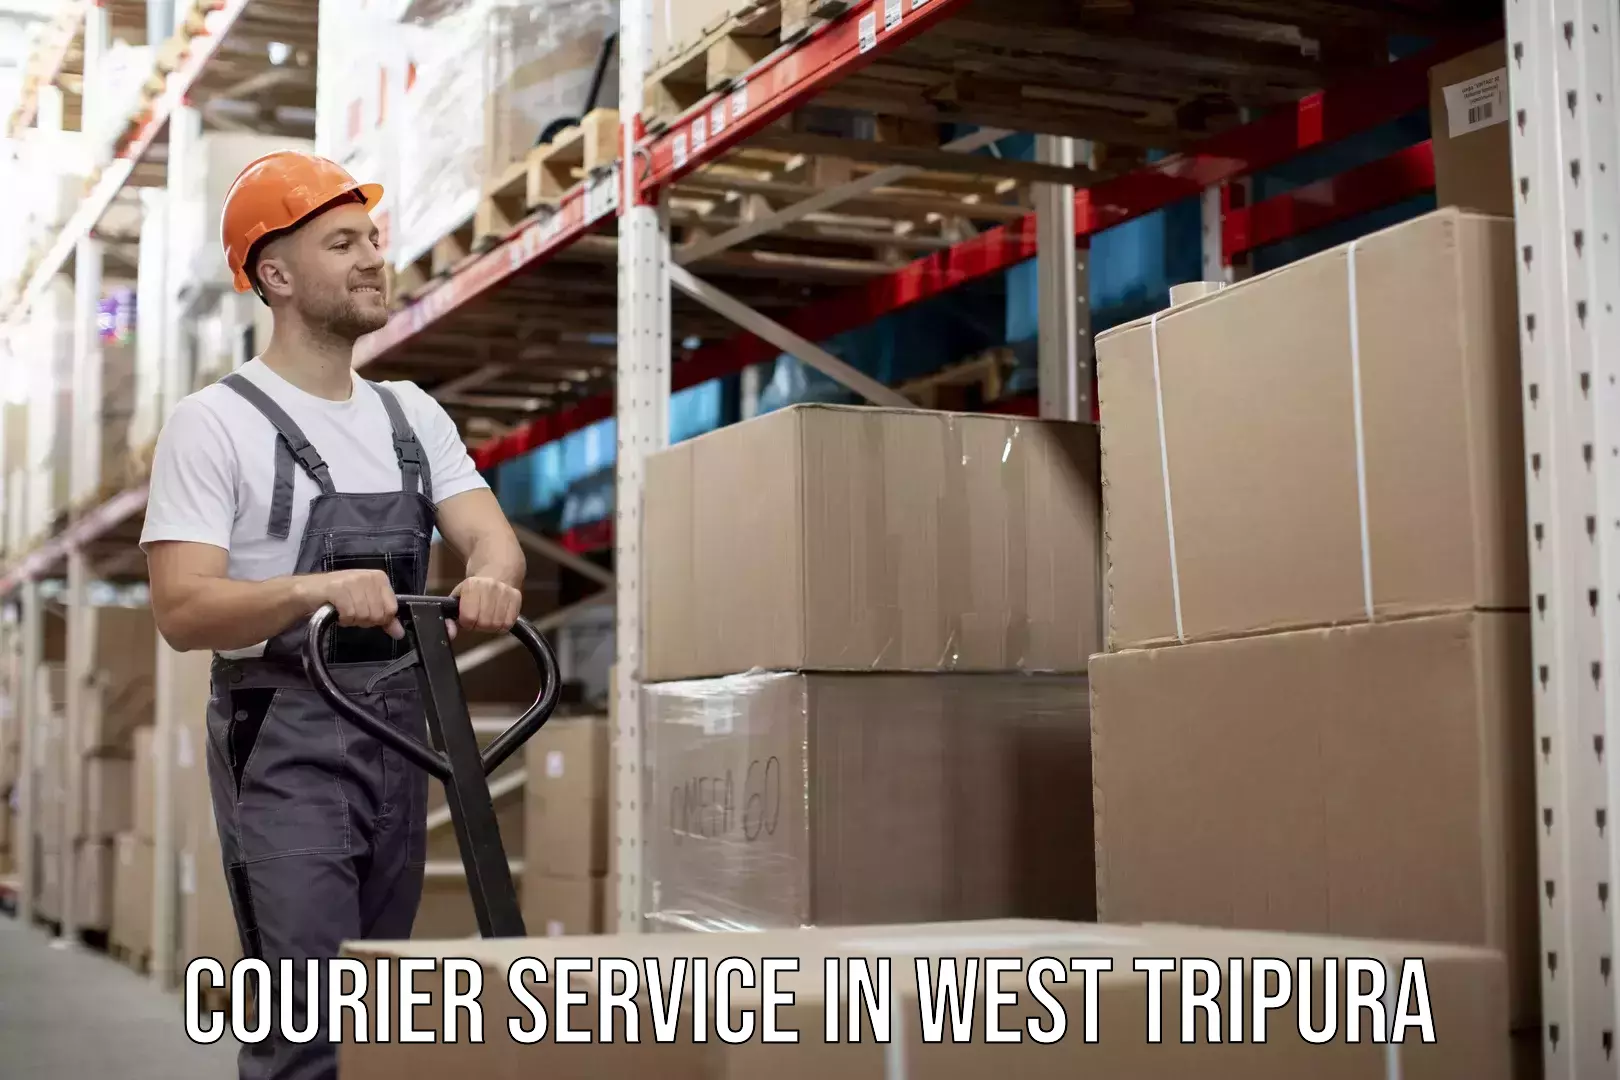 Courier service efficiency in West Tripura